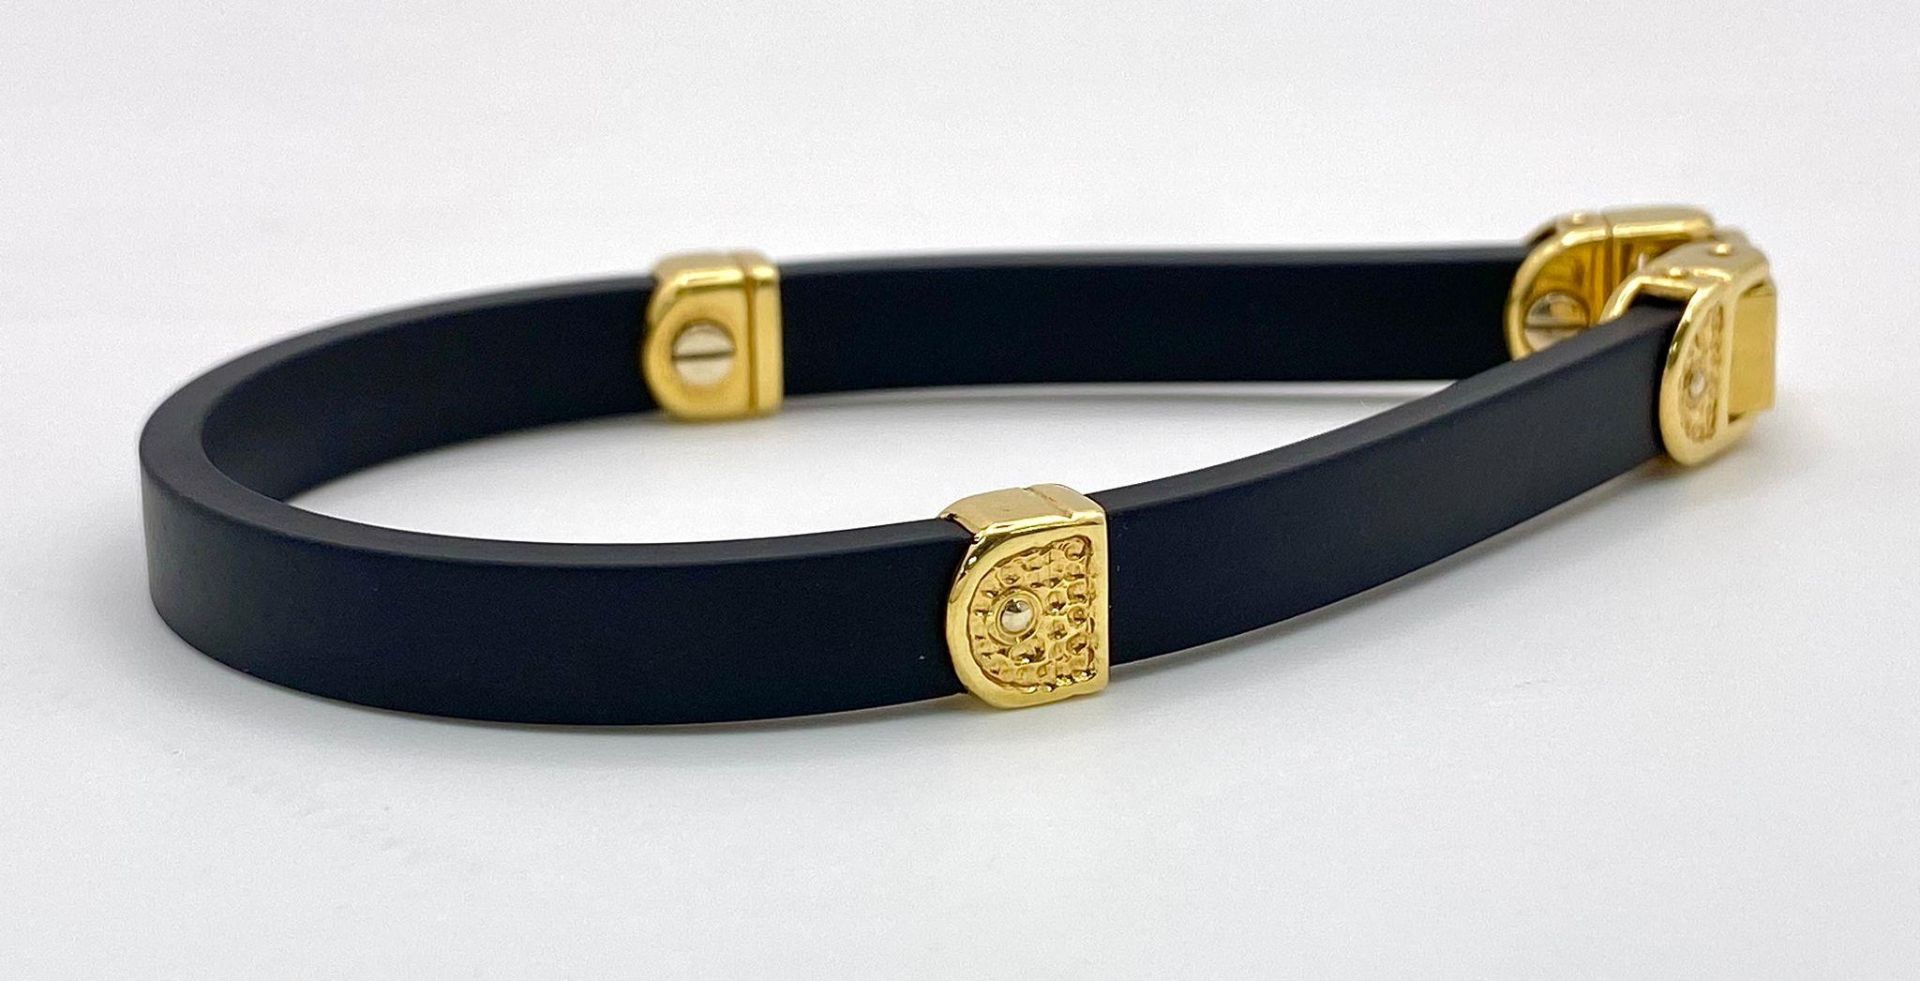 A Bersani Designer Black Silicone and 18K Yellow Gold Stylish Comfort Bracelet.